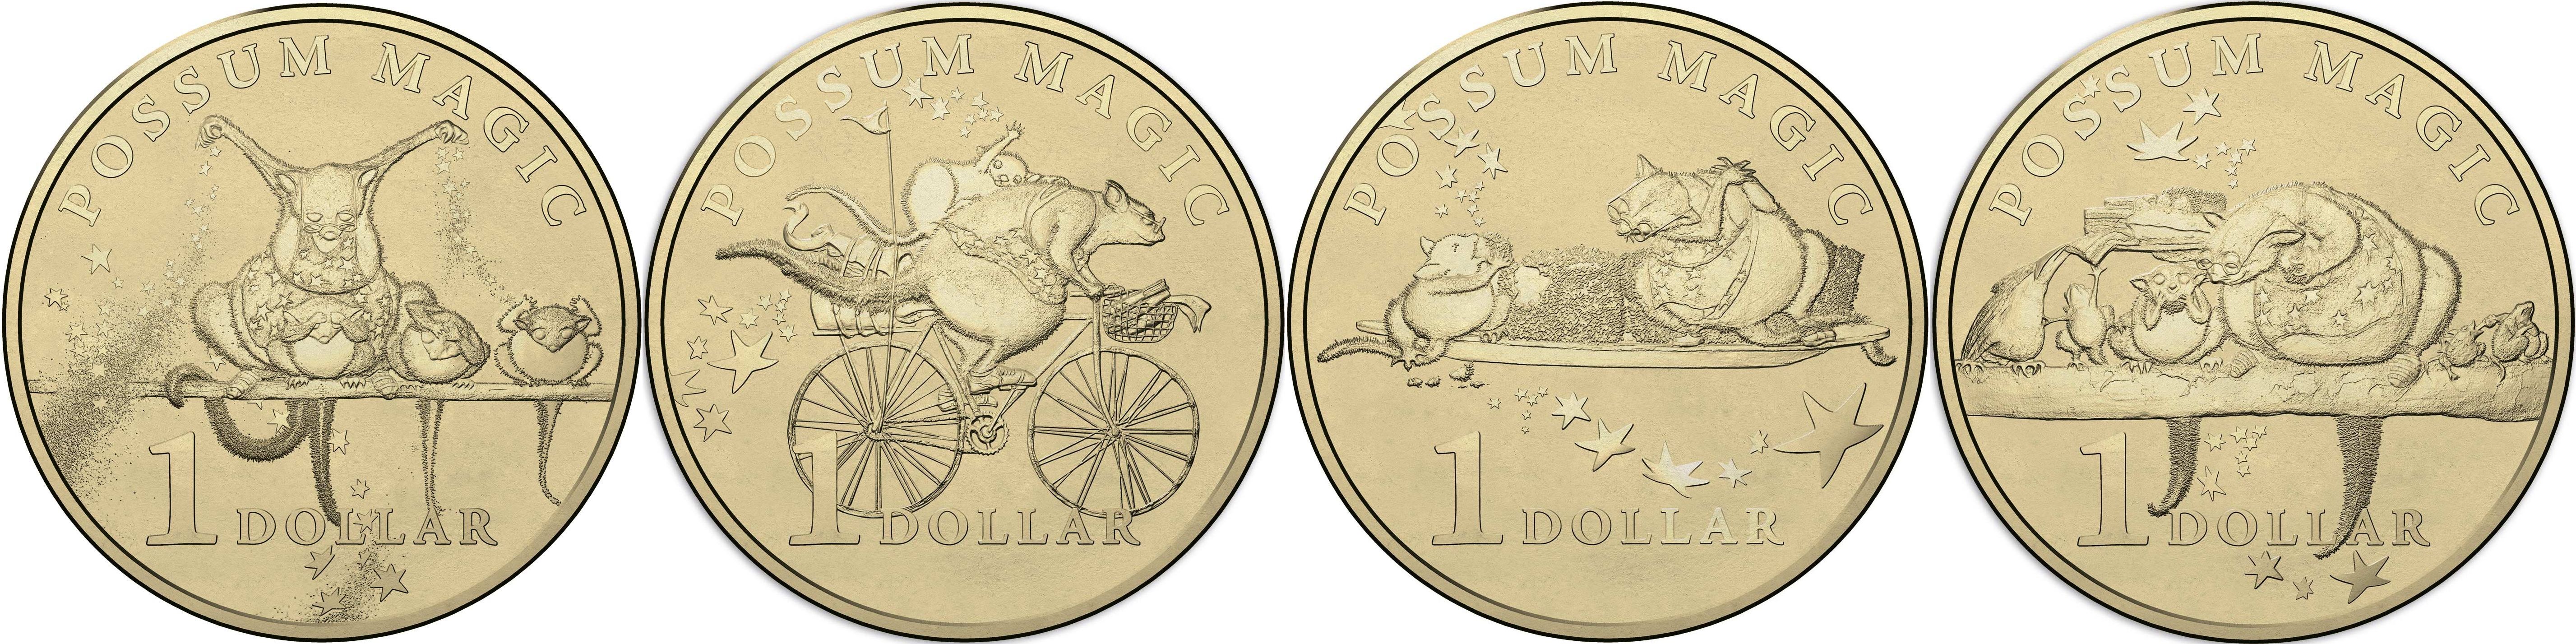 2017 Australia Possum Magic 8 Coin Set Limited Edition including 1c coin